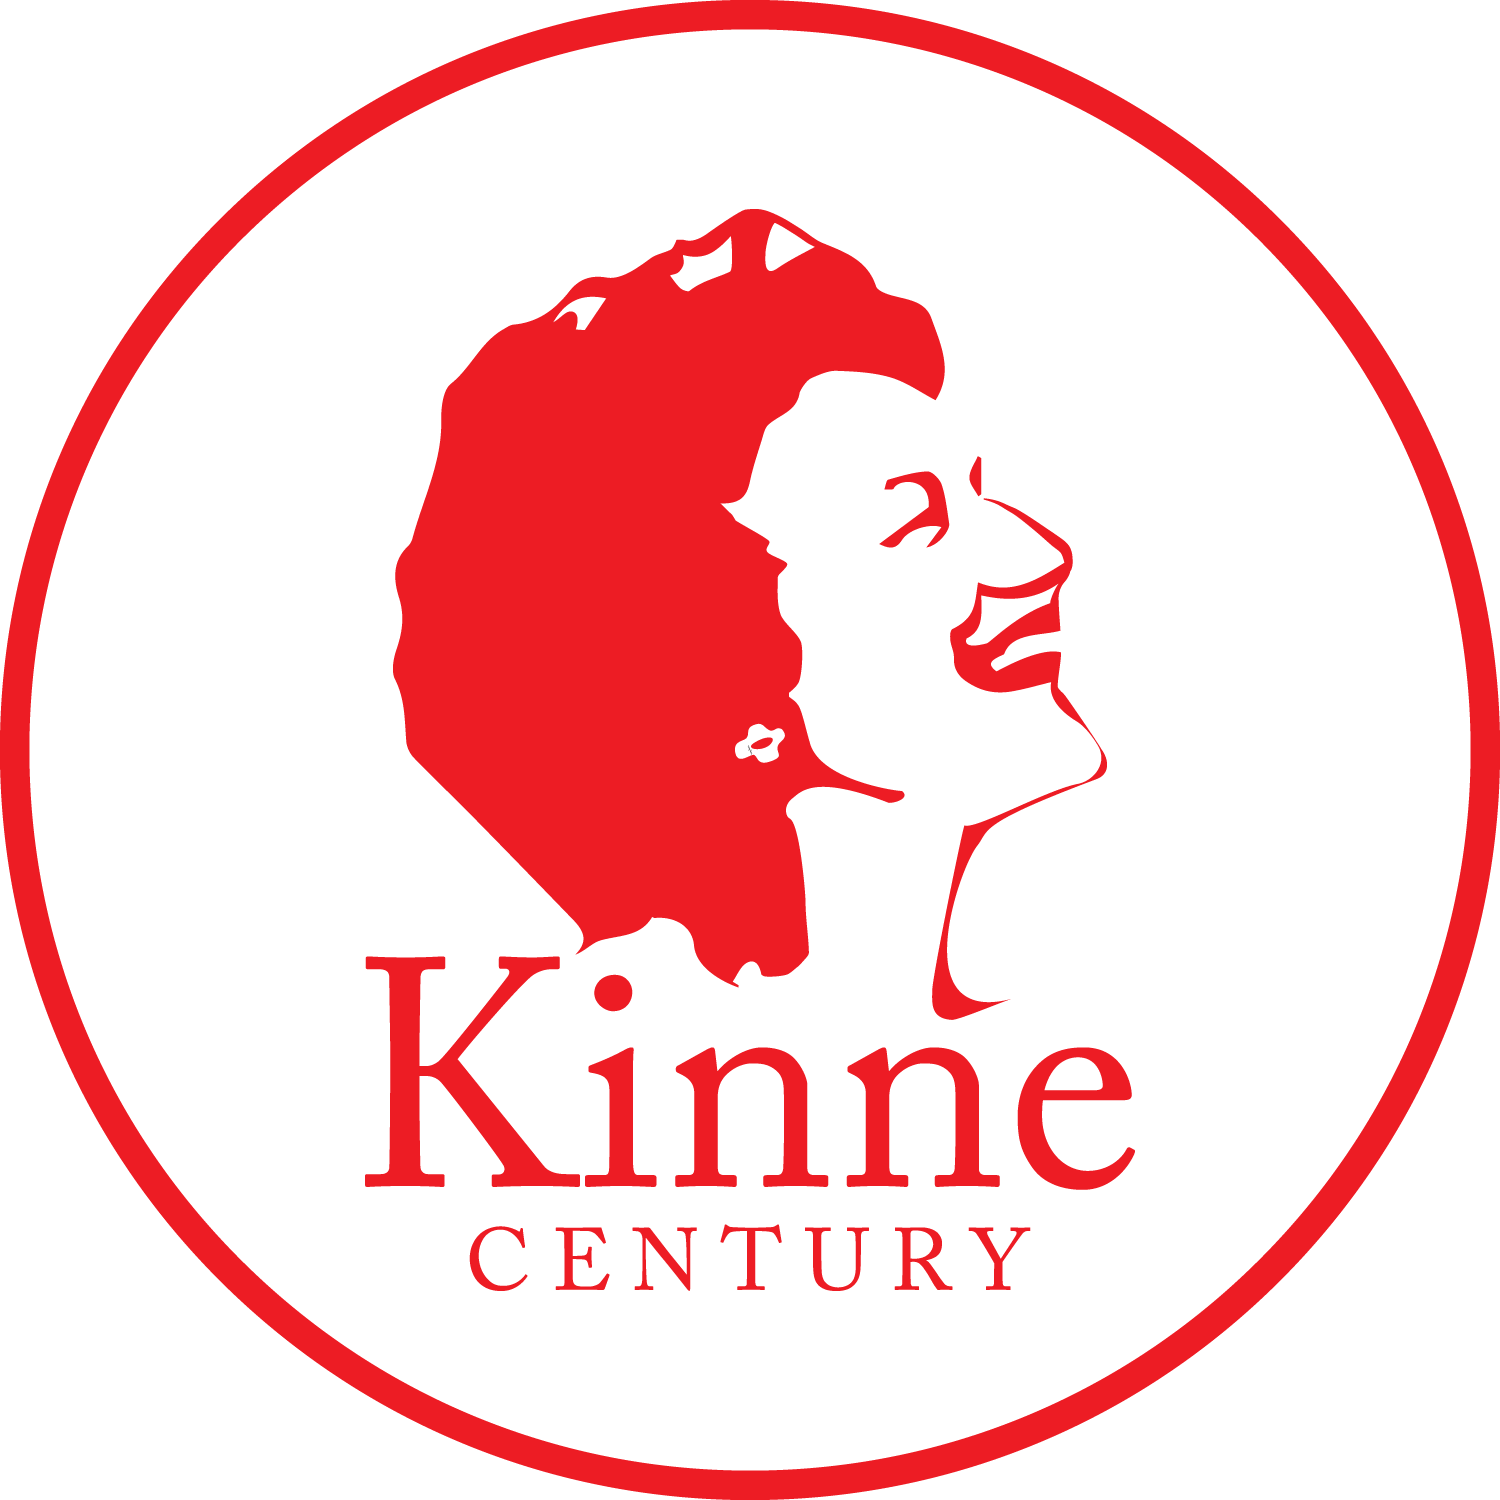 Kinne Century Society logo